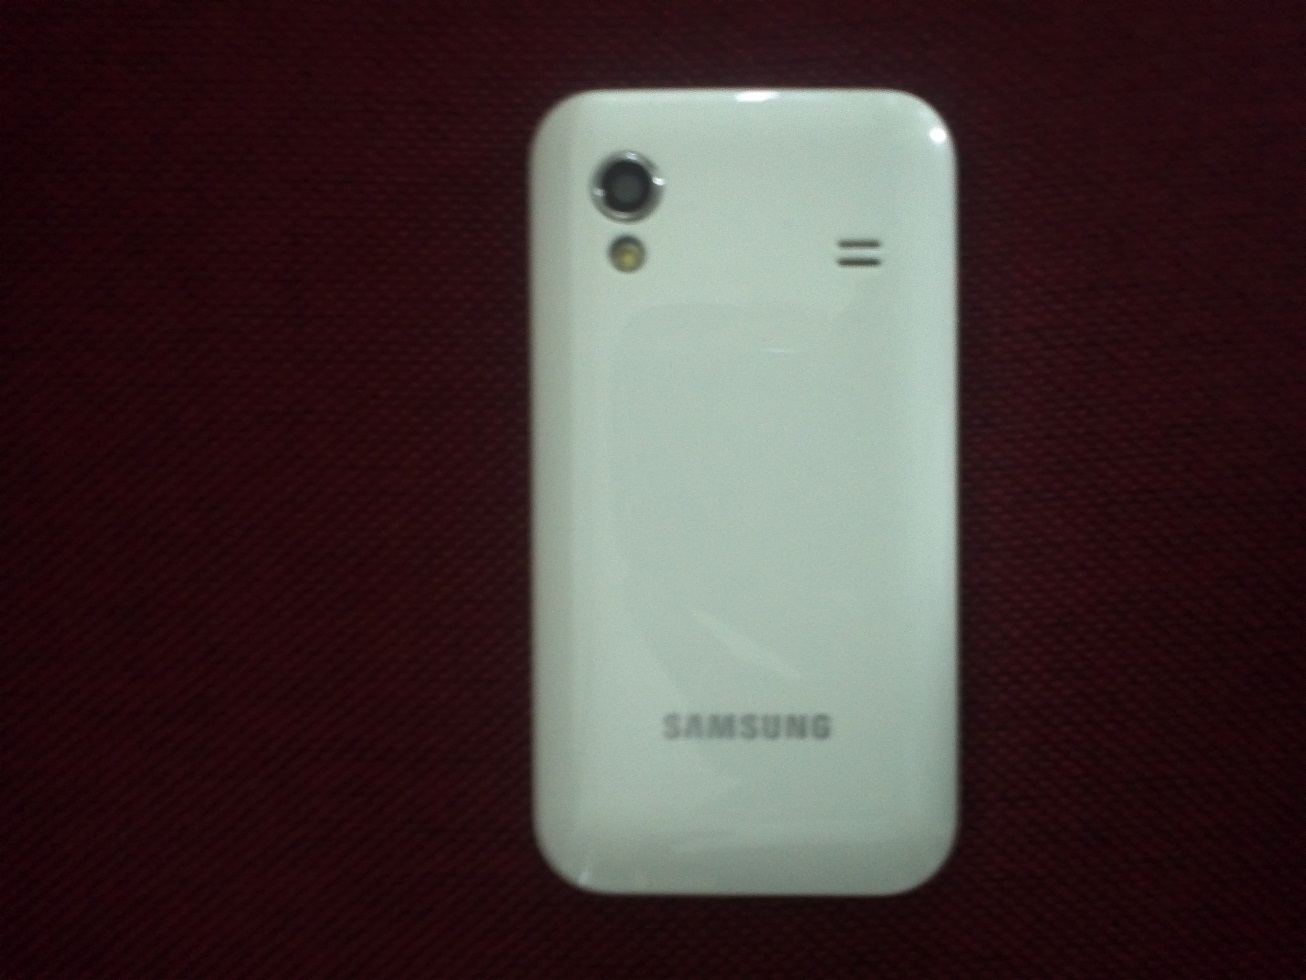 Samsung Galaxy Ace S5830 large image 1